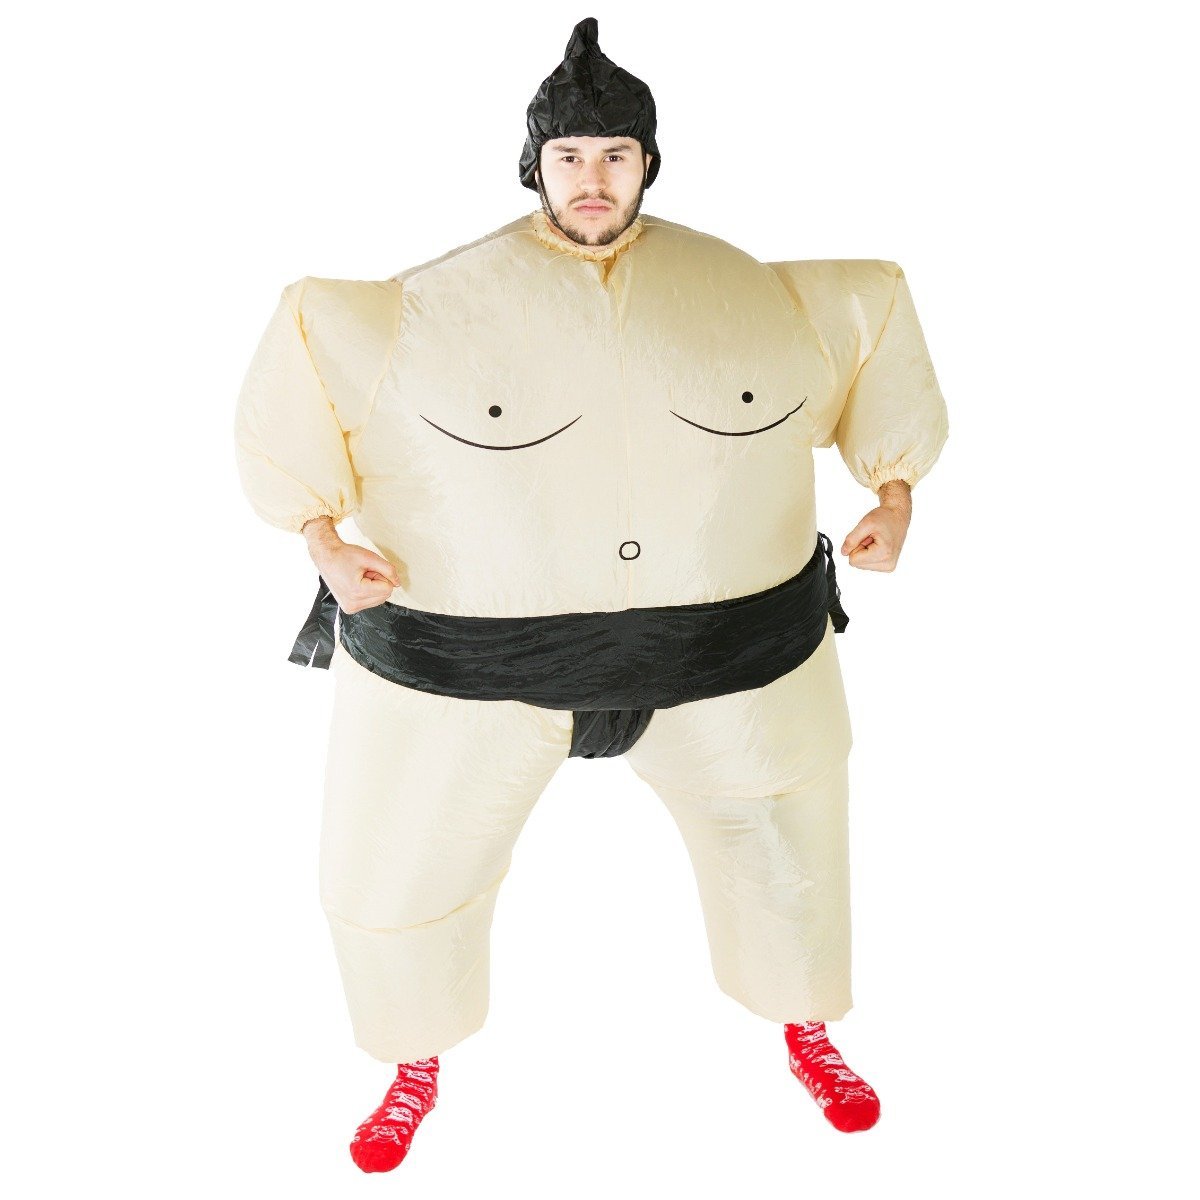 Bodysocks - Inflatable Sumo Wrestler Costume